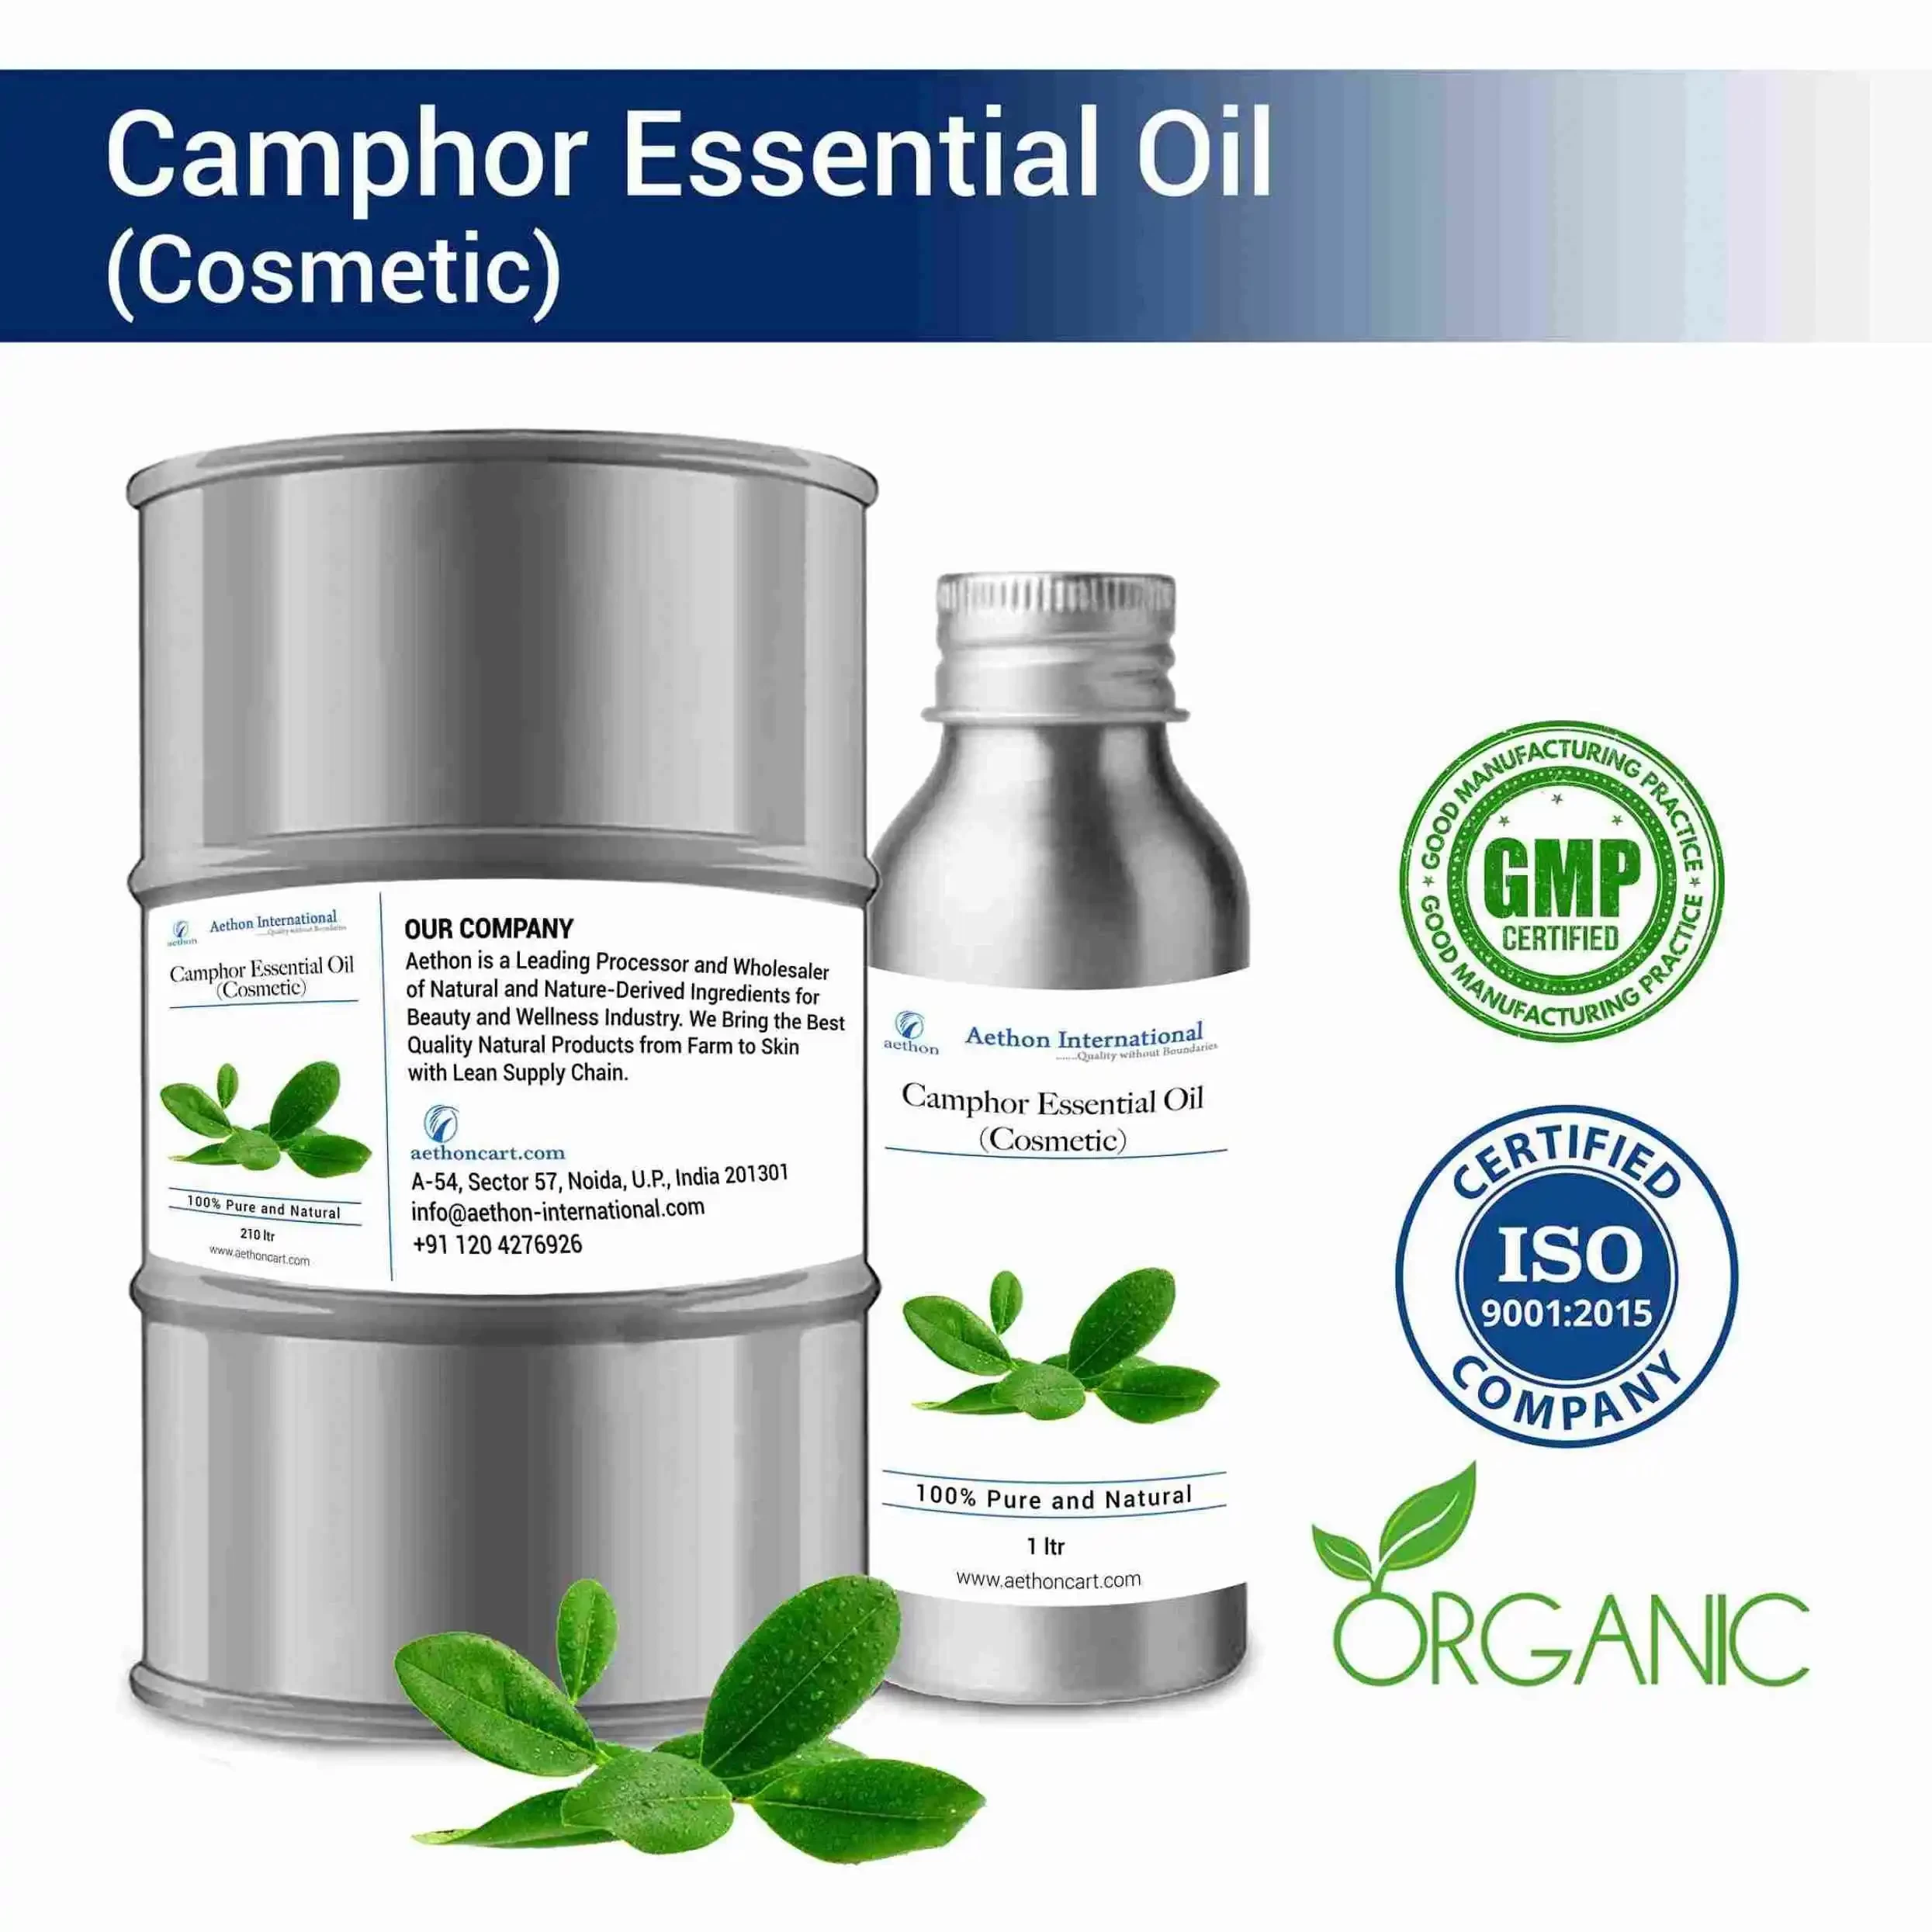 Camphor Essential Oil (Cosmetic)